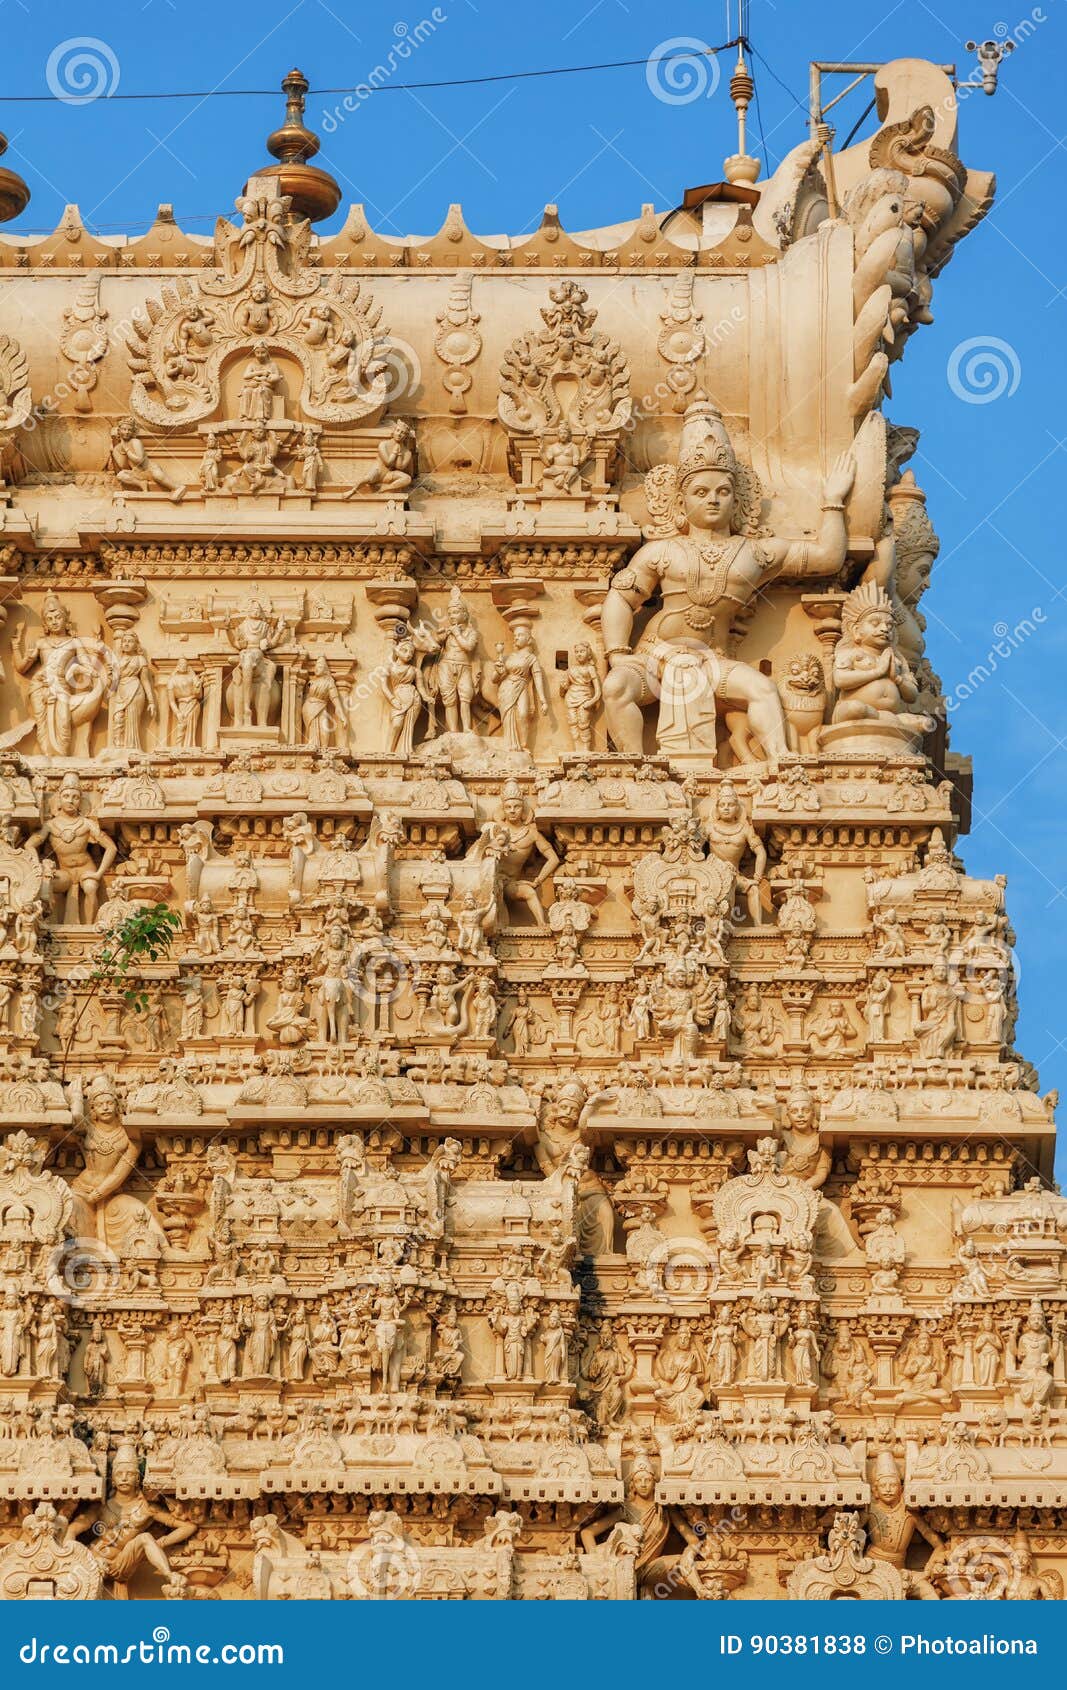 Architecture Details of Facade Sri Padmanabhaswamy Temple in Trivandrum  Kerala India Stock Photo - Image of epic, kerala: 90381838